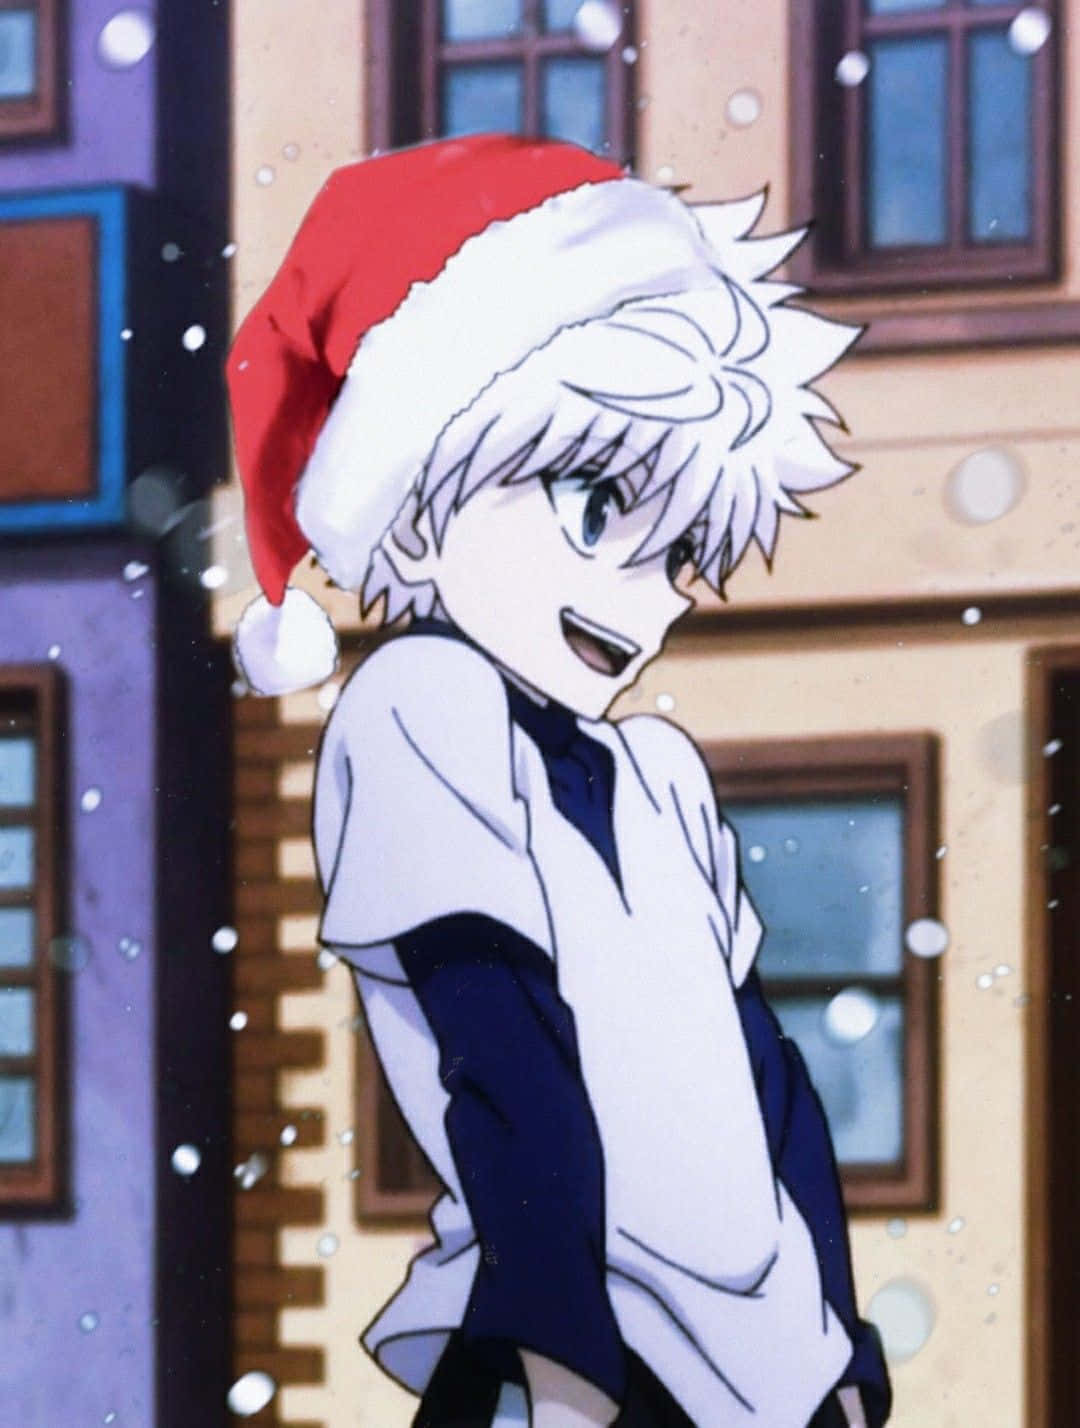 To drenge klædt op som julemand og nisser i en hyggelig jule Anime scene. Wallpaper